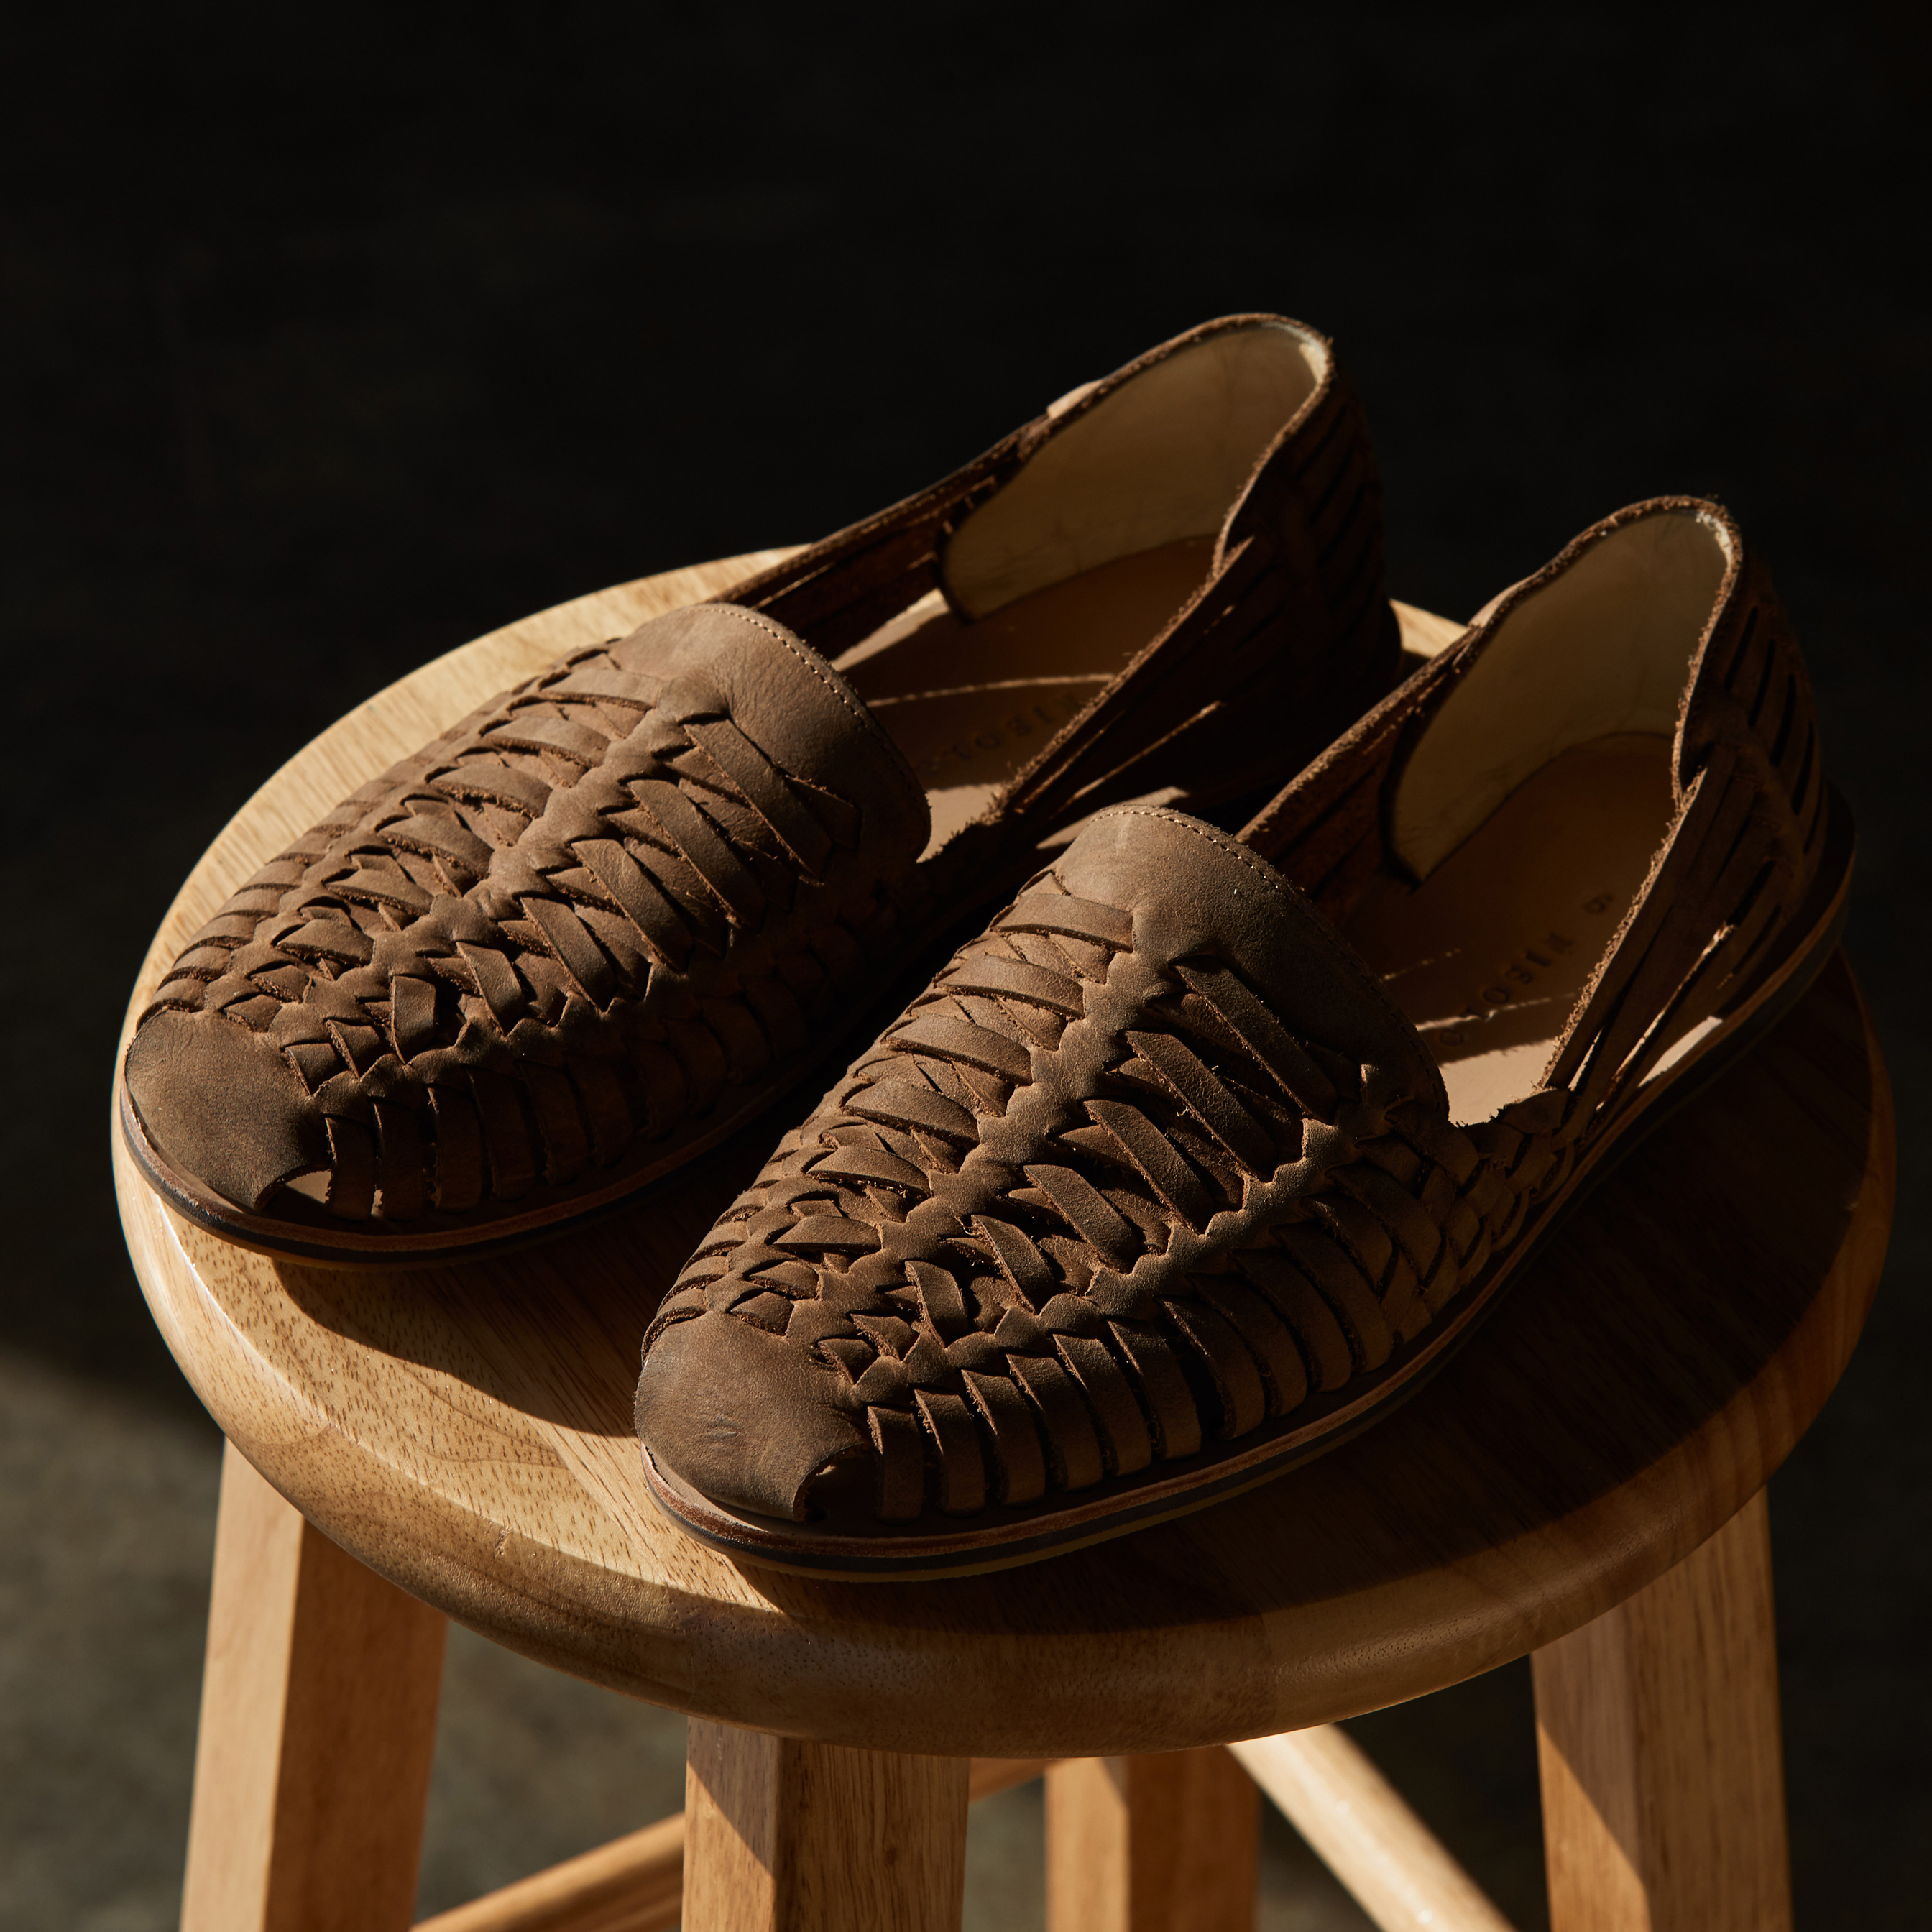 Roxy Womens Woven Braided Huarache Sandals